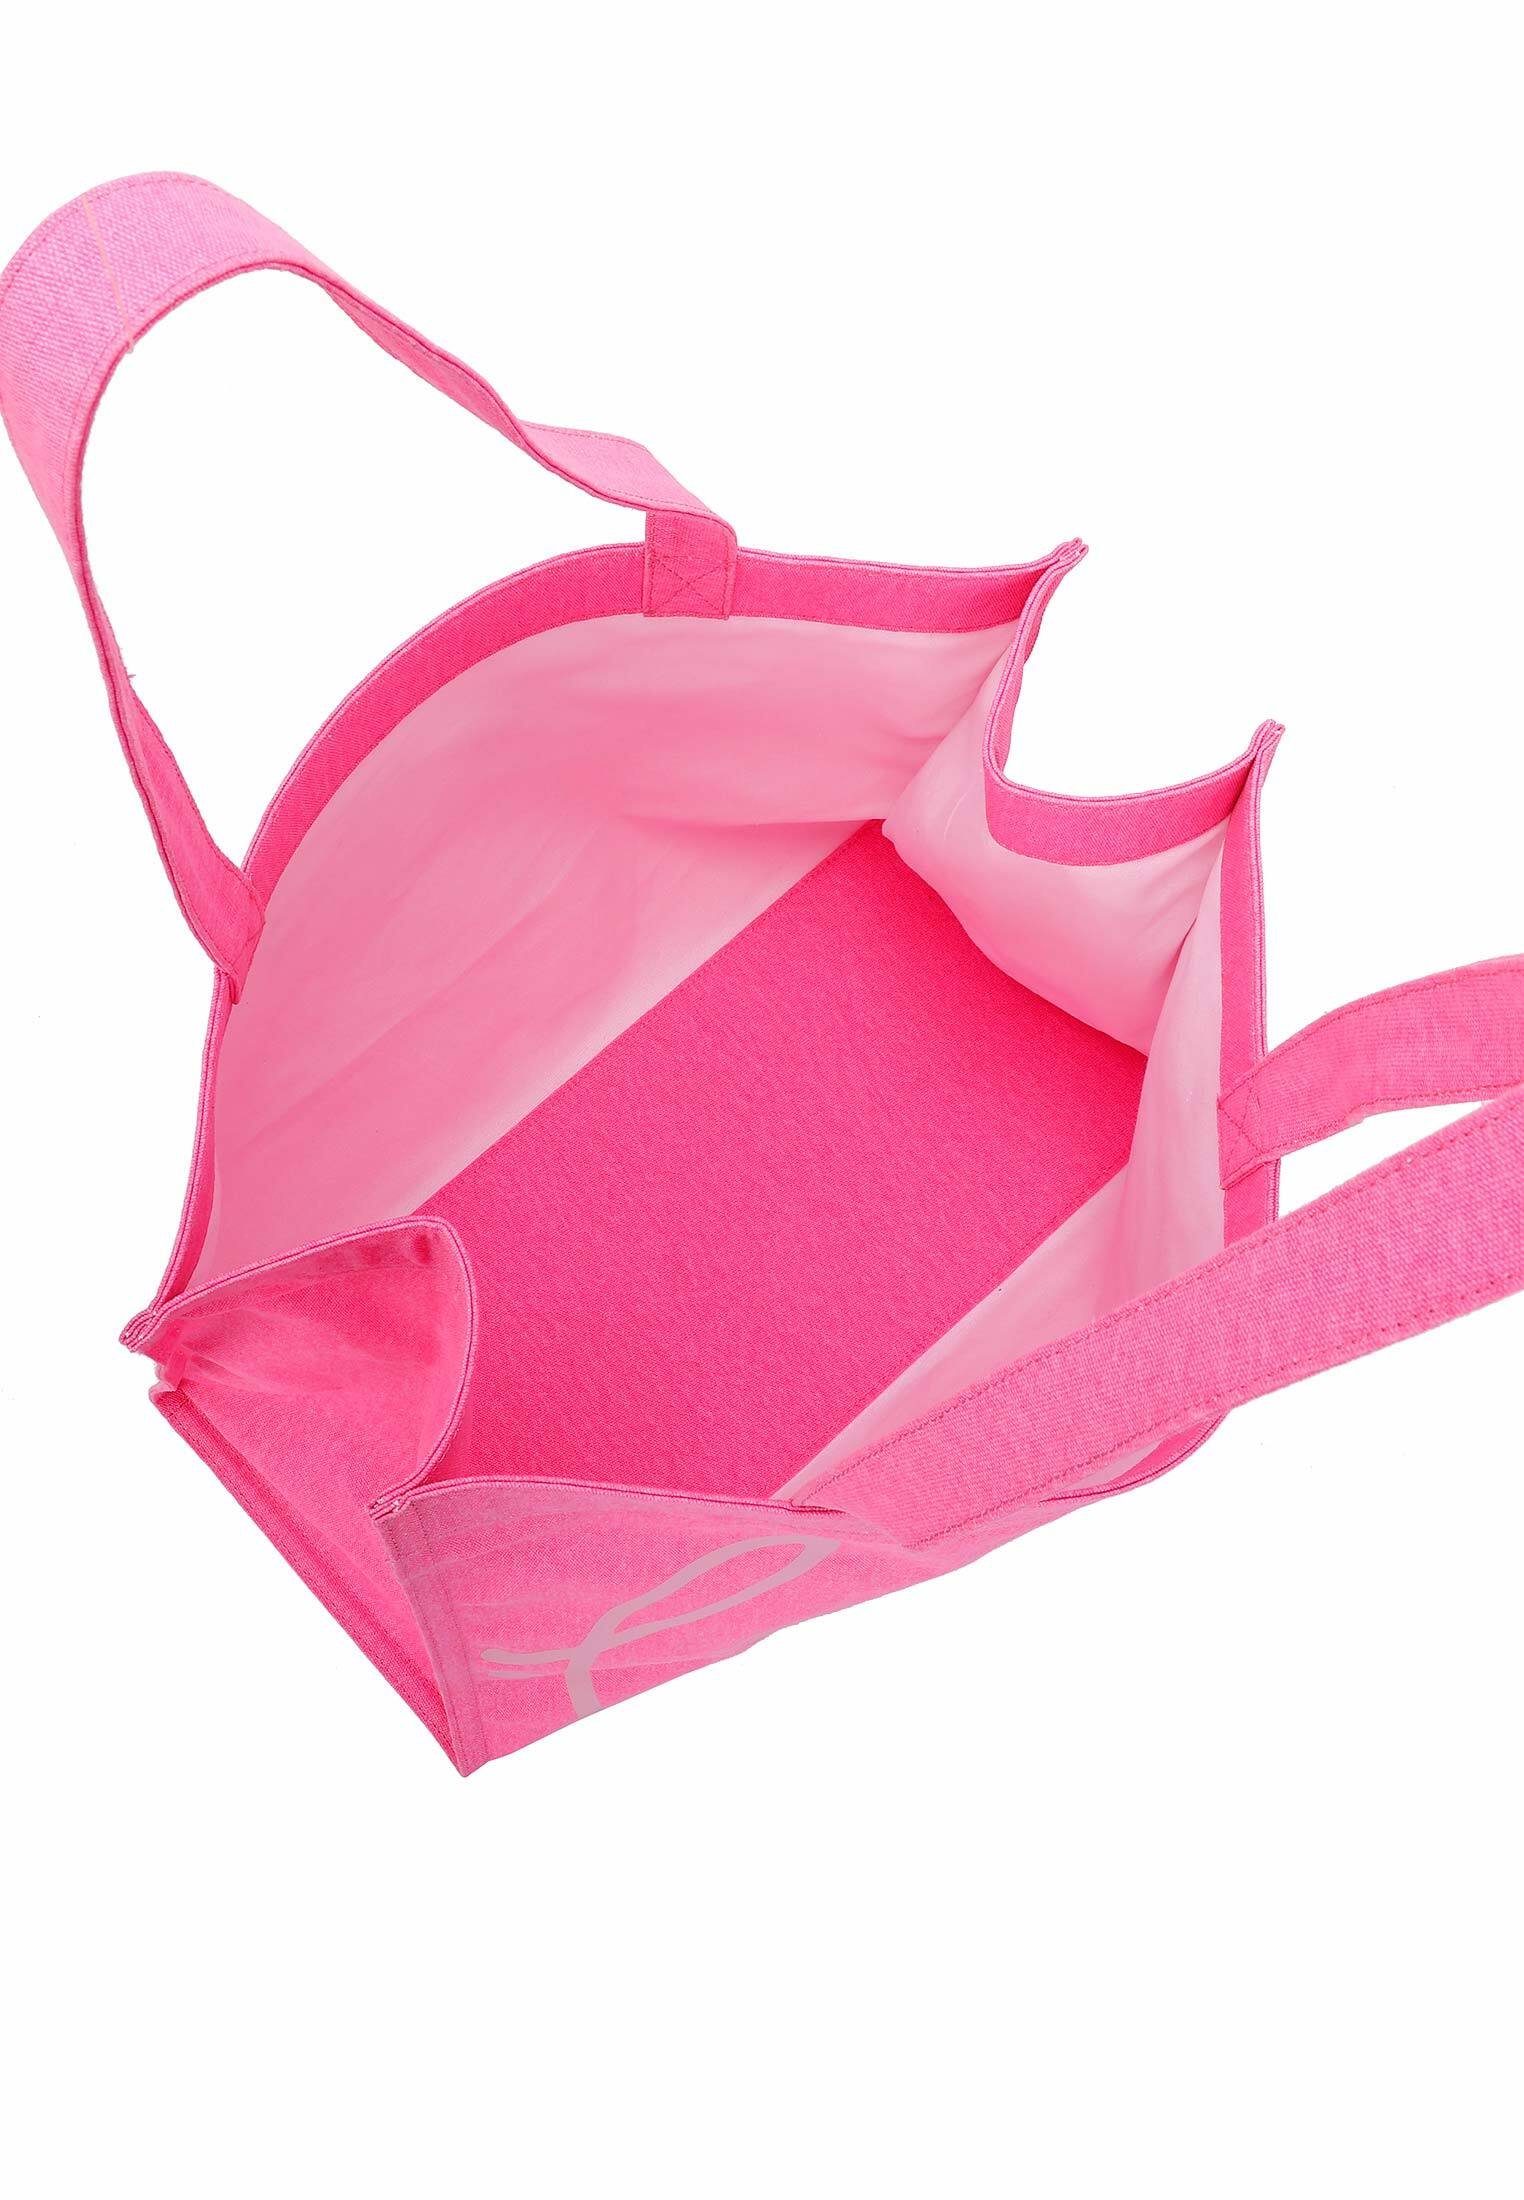 Easy01 Shopper Pink aus Fritzi Neon Preußen